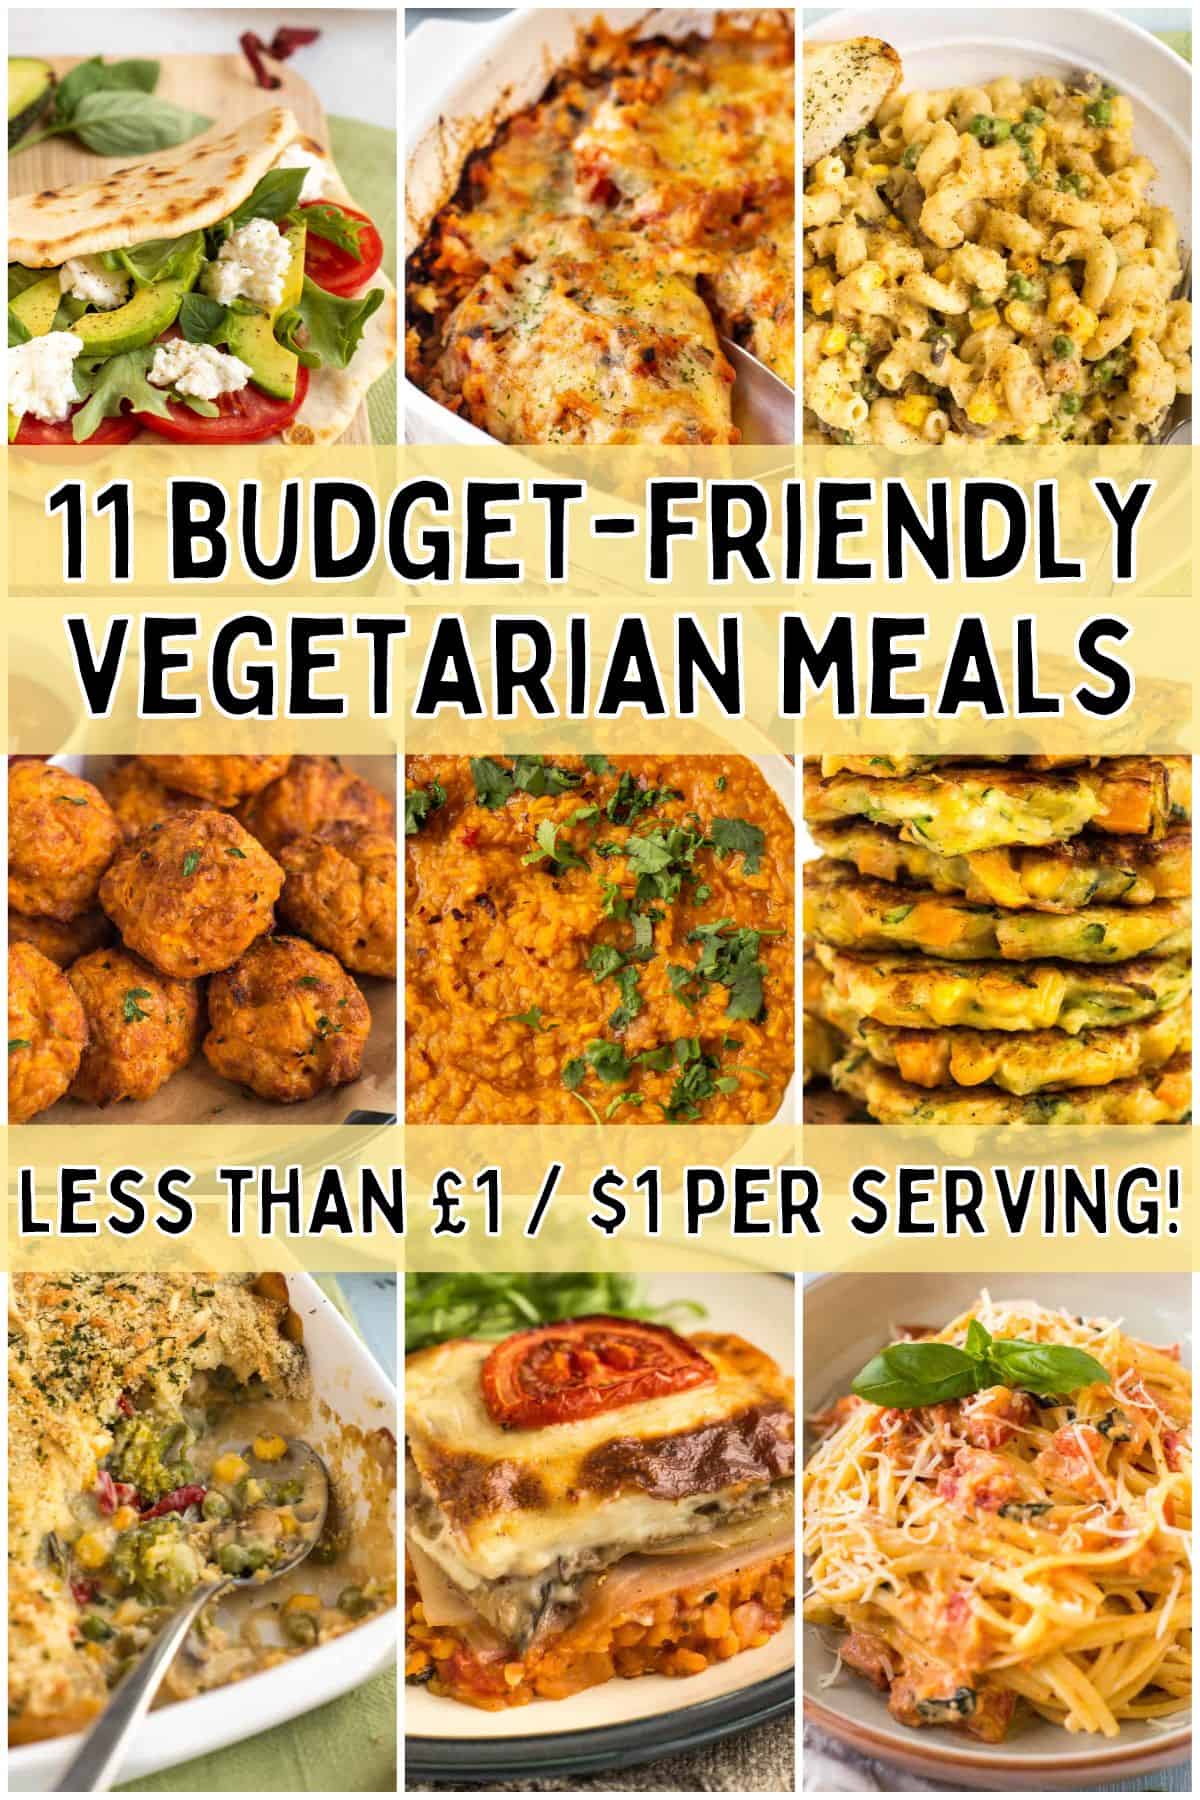 Reduced-price vegan meals